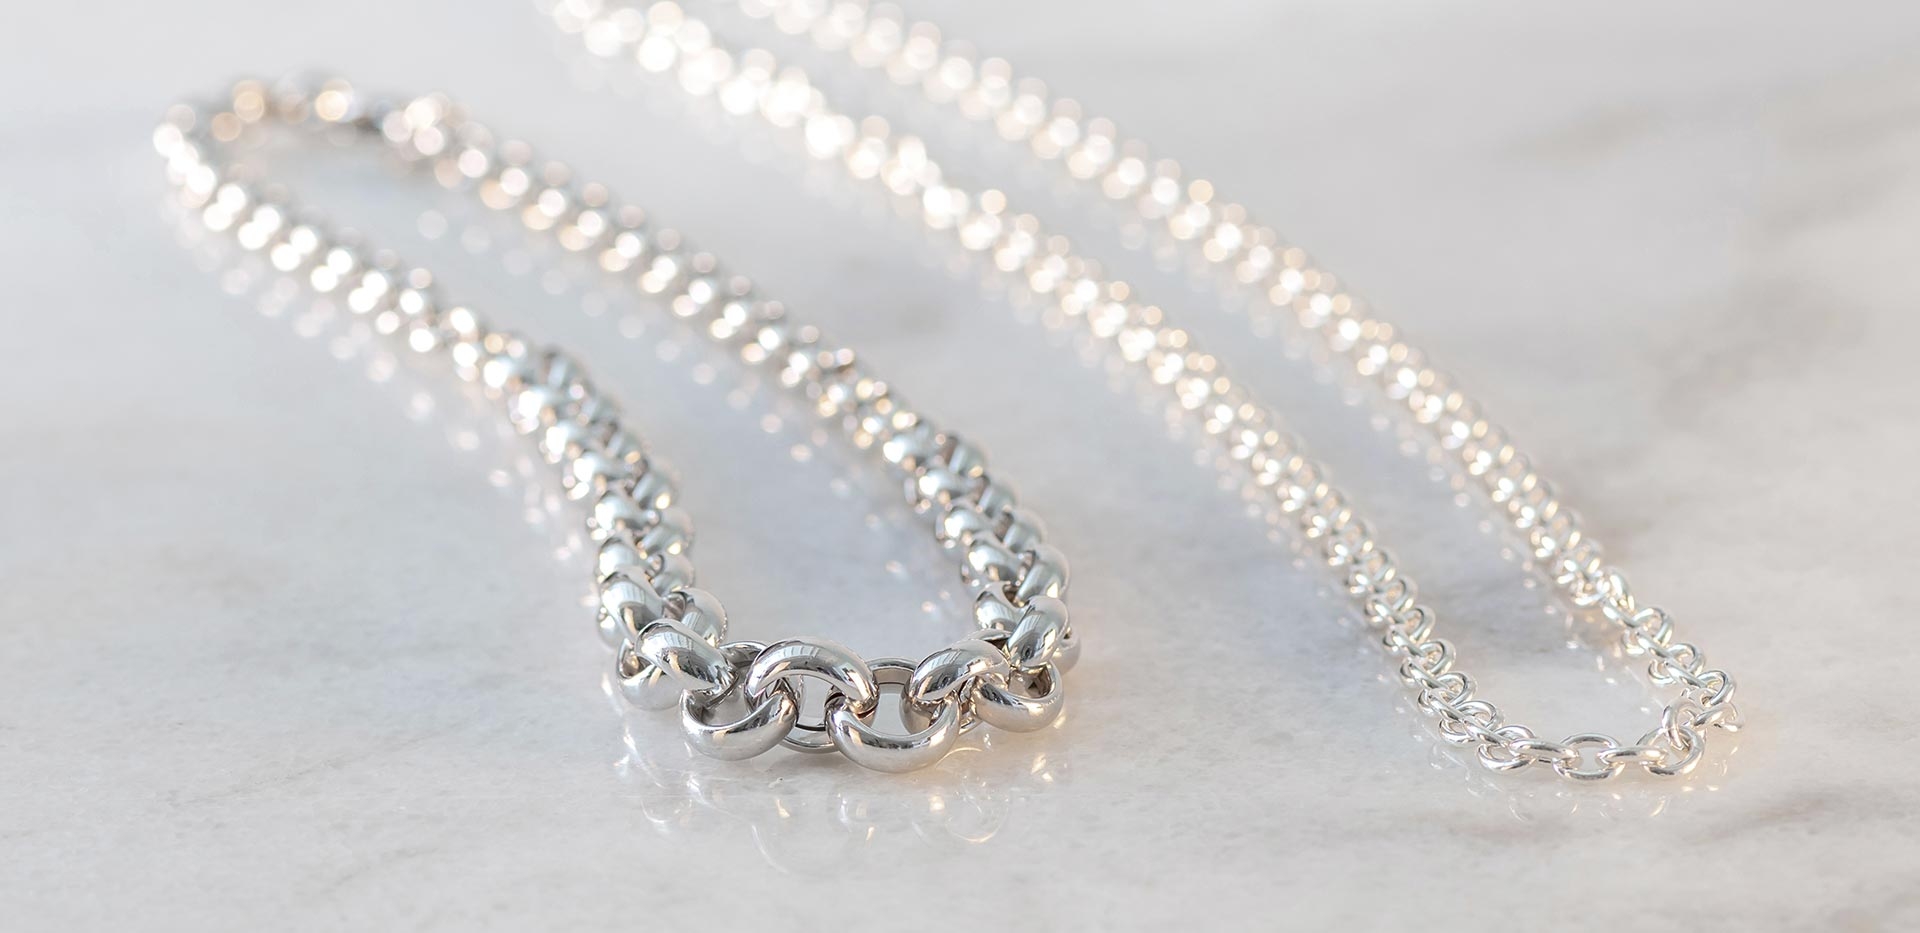 Chains - Dawes Jewellery Category